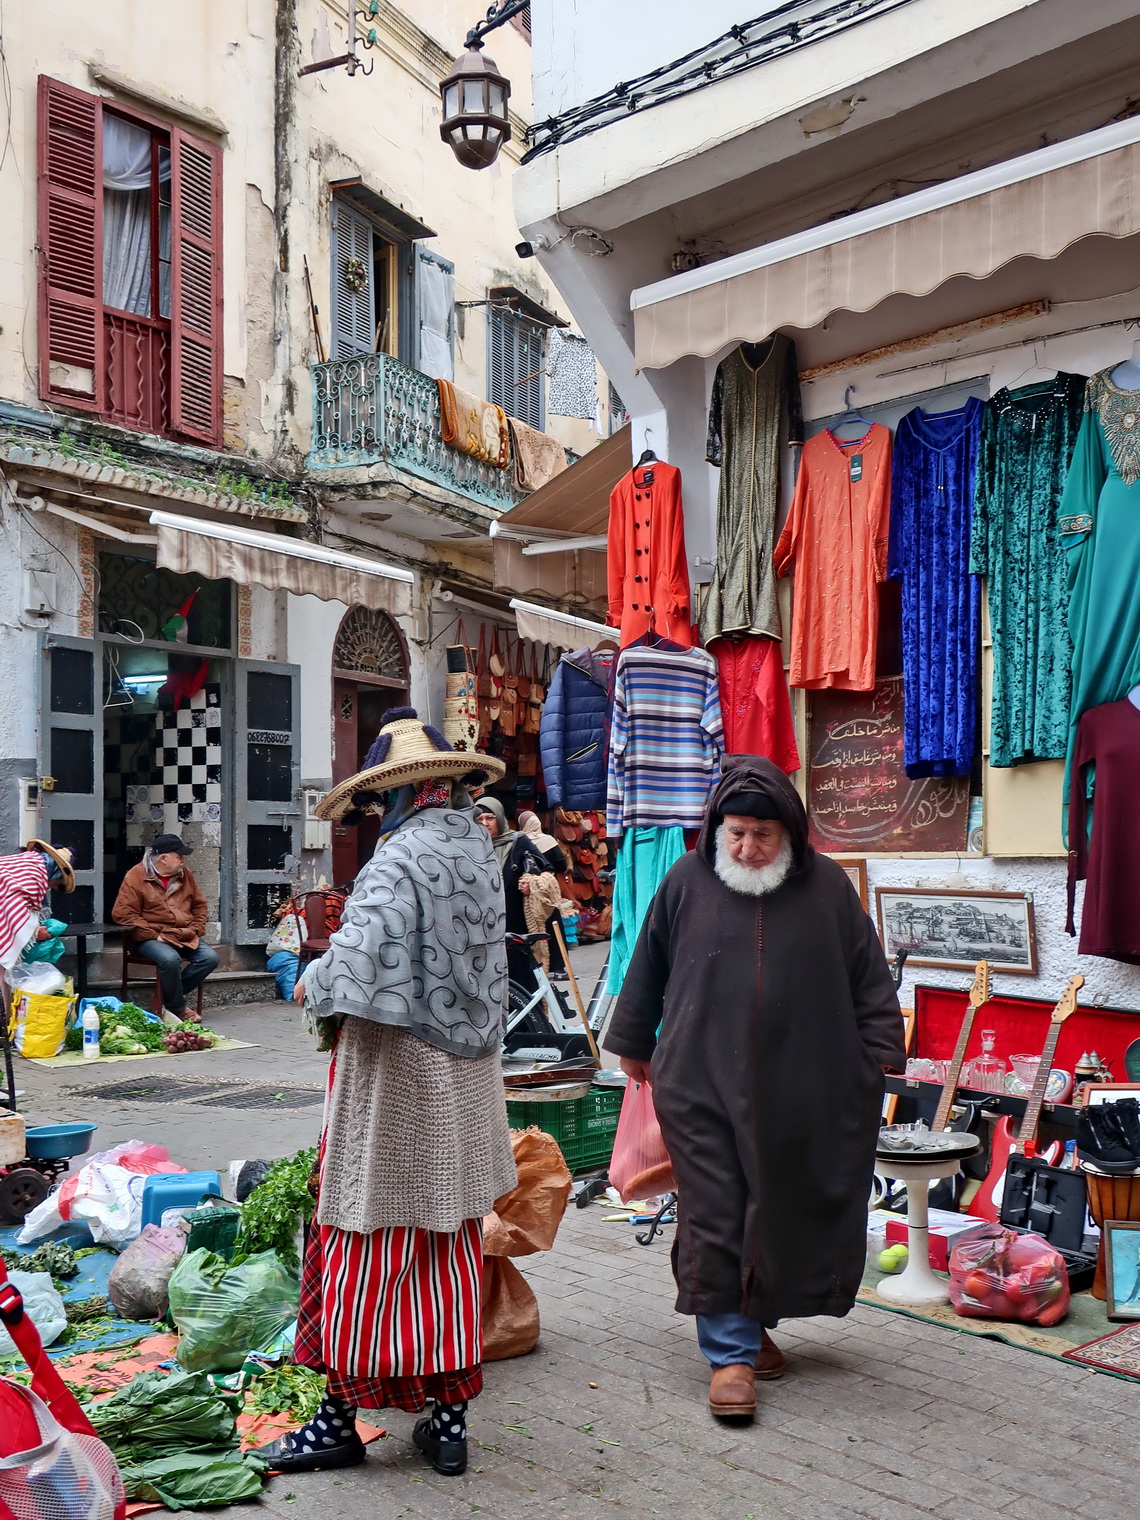 In the Medina - Old Islamic Town of Tangier